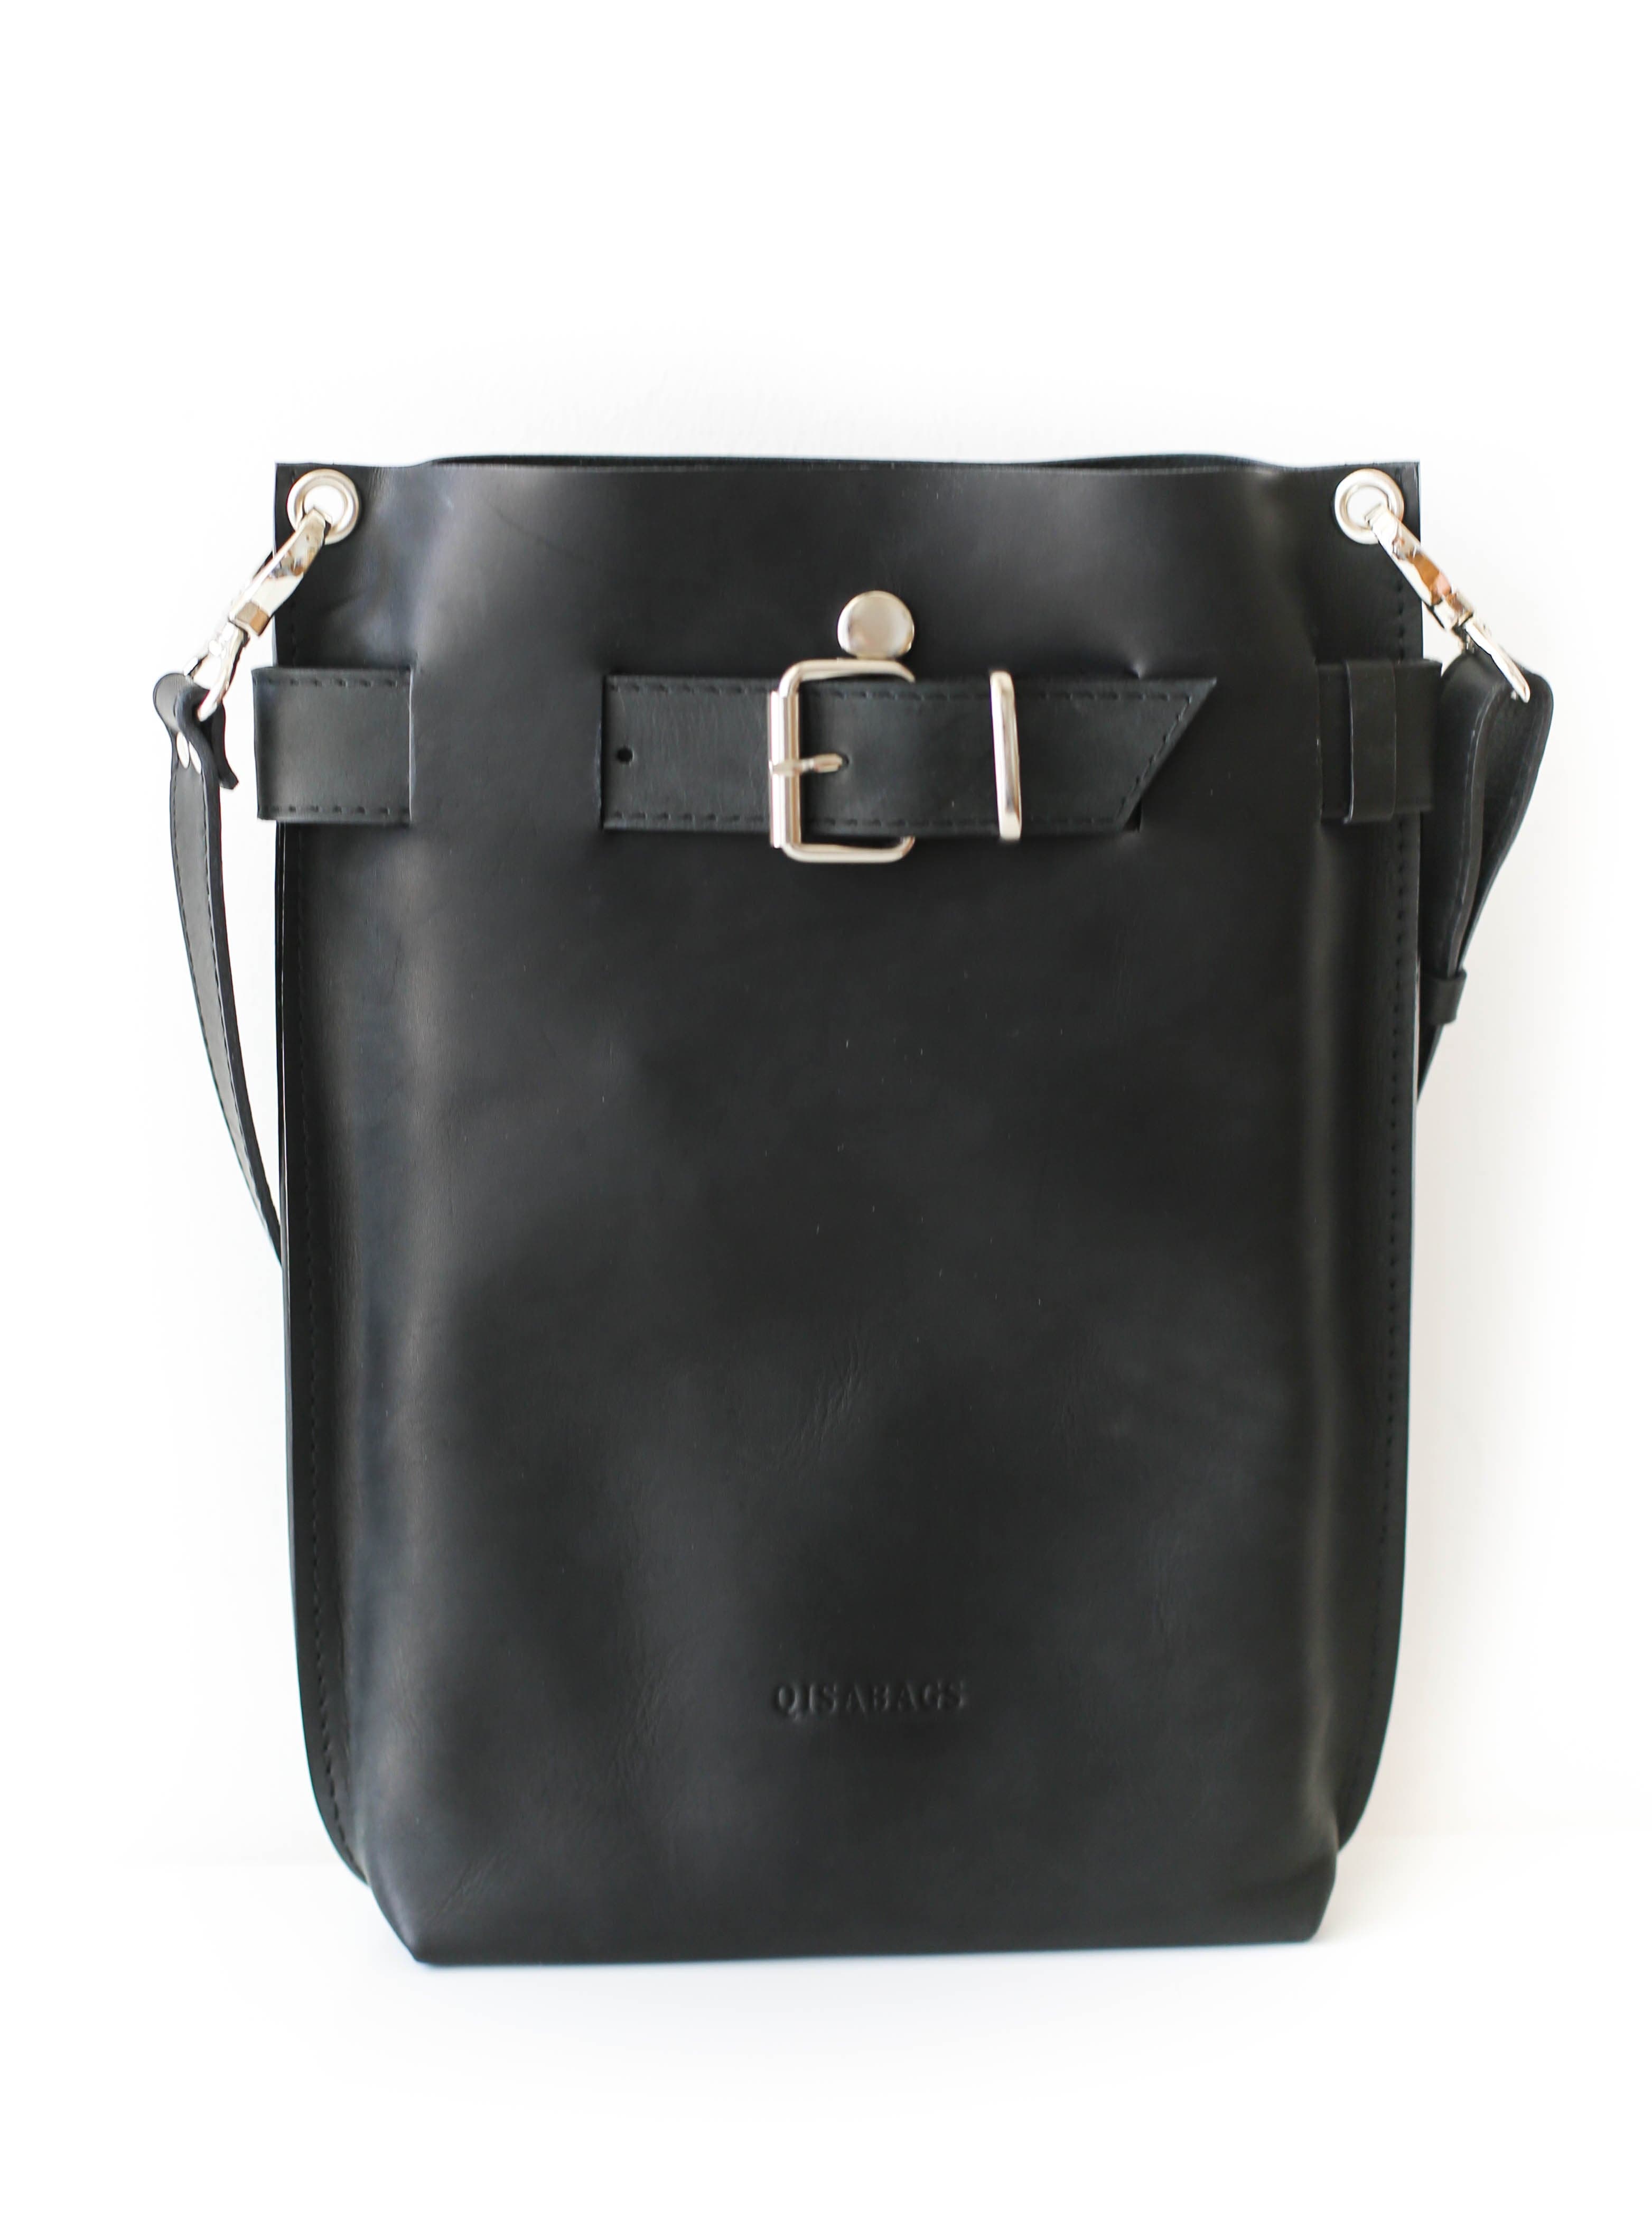 Vintage Coach Court Bag 9870 Black Leather & Silver Hardware Satchel Style  Crossbody Purse Top Carrying Handle Handbag Shoulder Bag - Etsy